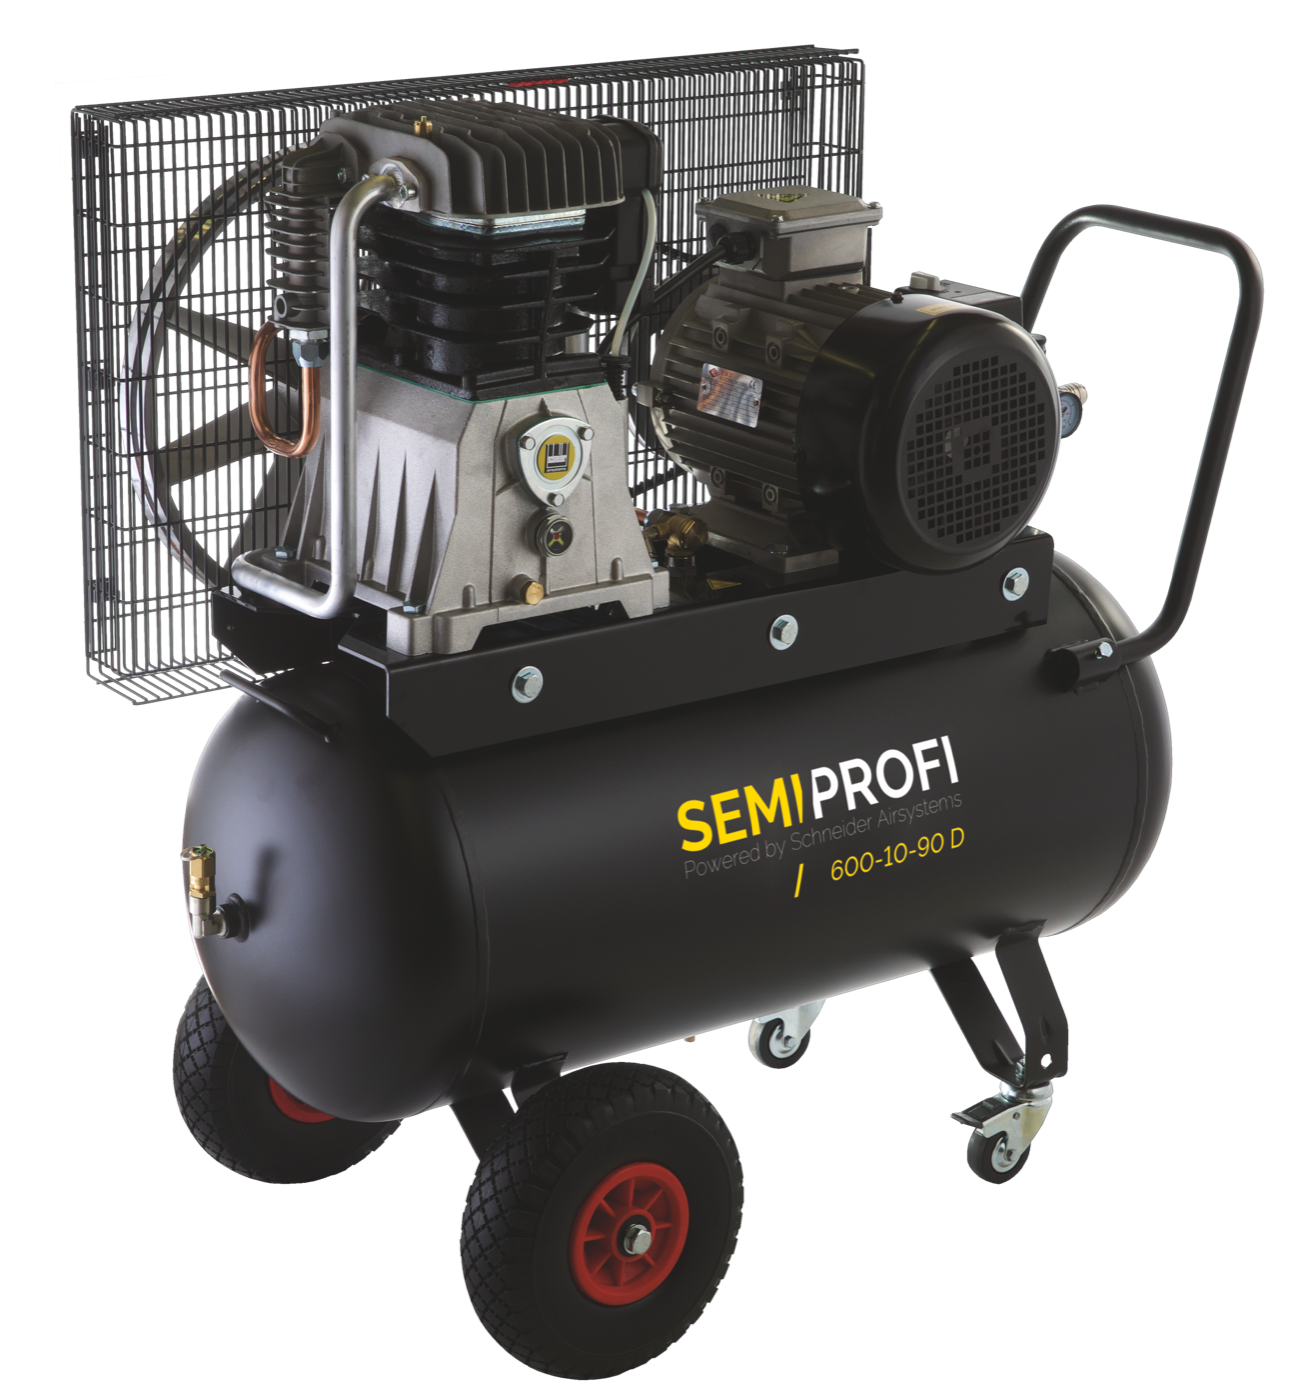 Schneider kompresor SEMI PROFI 600-10-90 D   1121550238 - kompresory | MasMasaryk